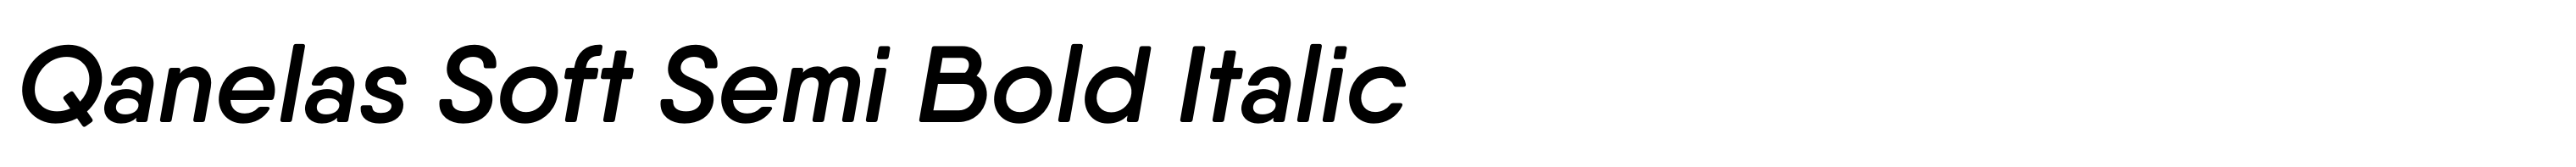 Qanelas Soft Semi Bold Italic